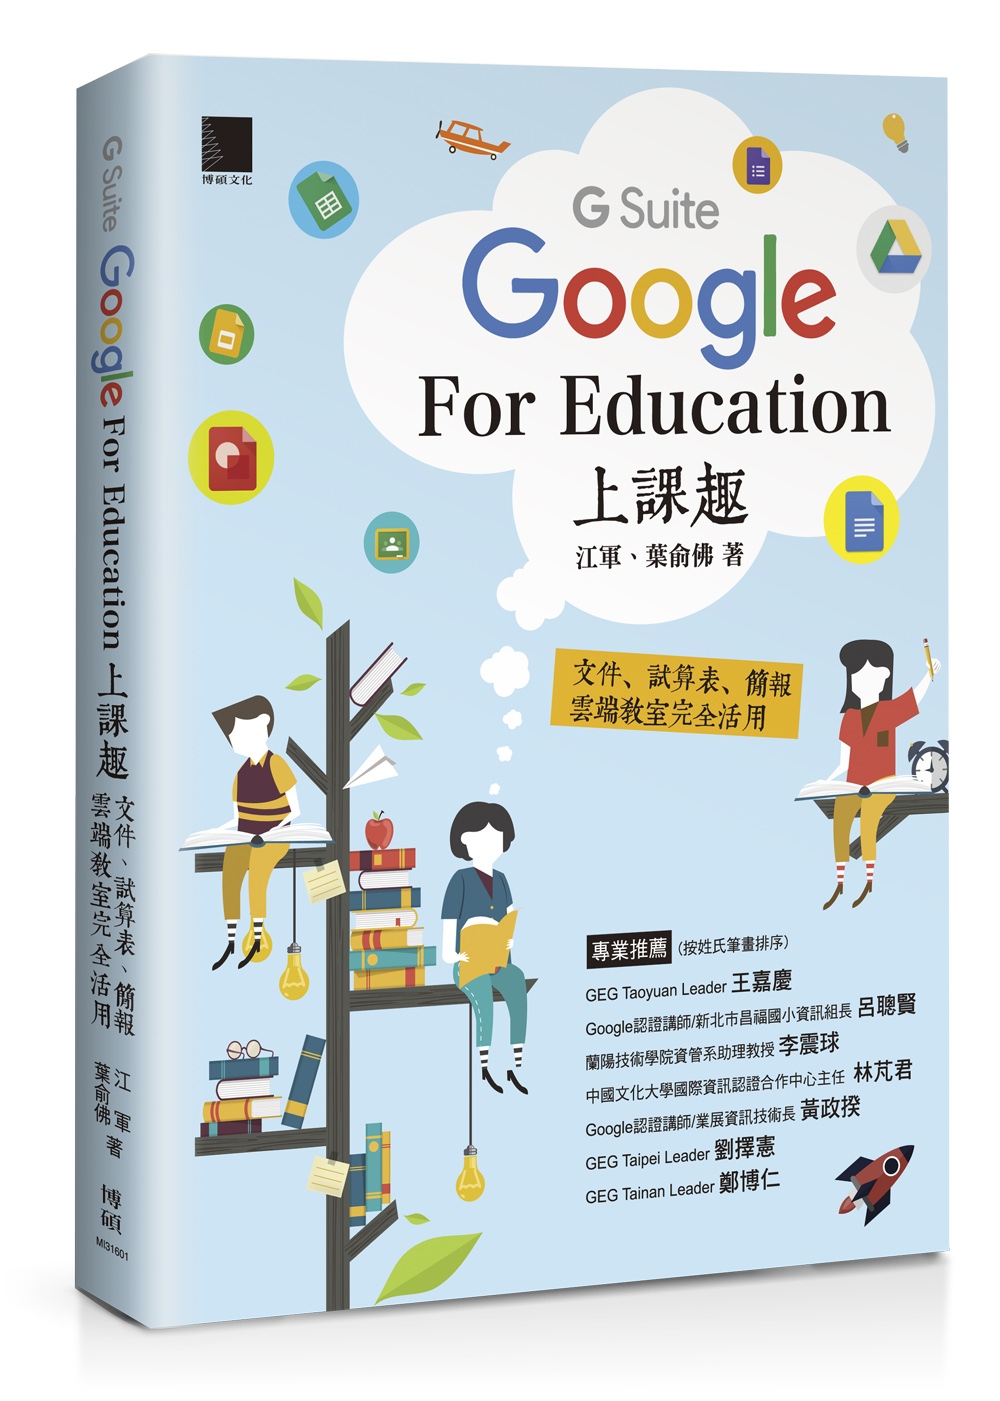 Google [G Suite] for Education...